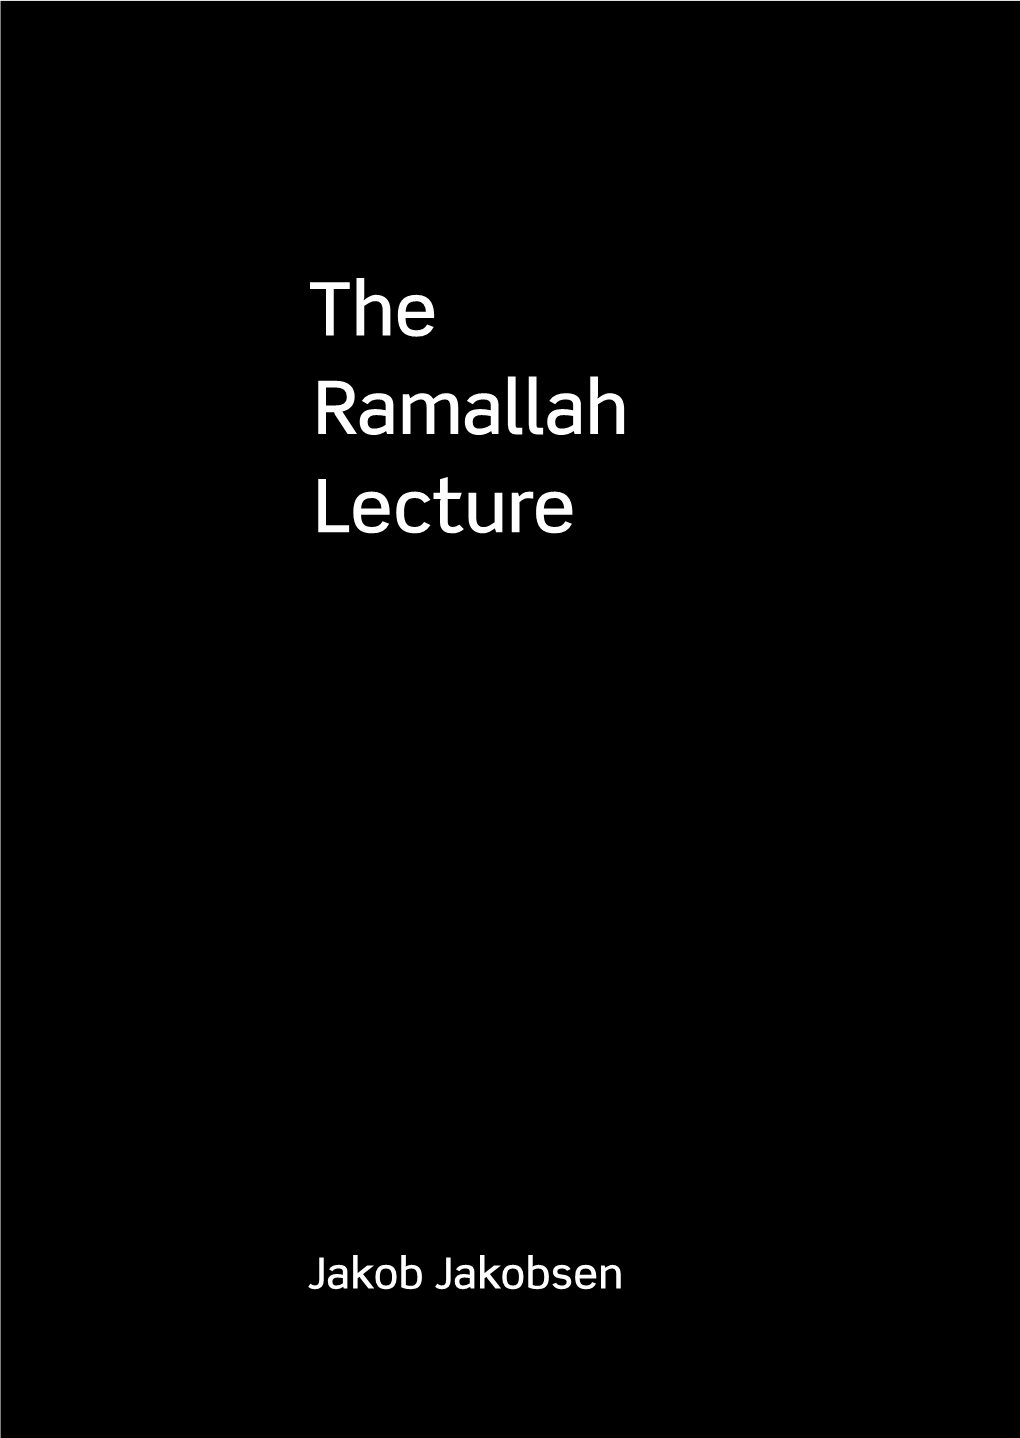 The Ramallah Lecture ISBN 978-87-993651-2-8 Nebula the Ramallah Lecture